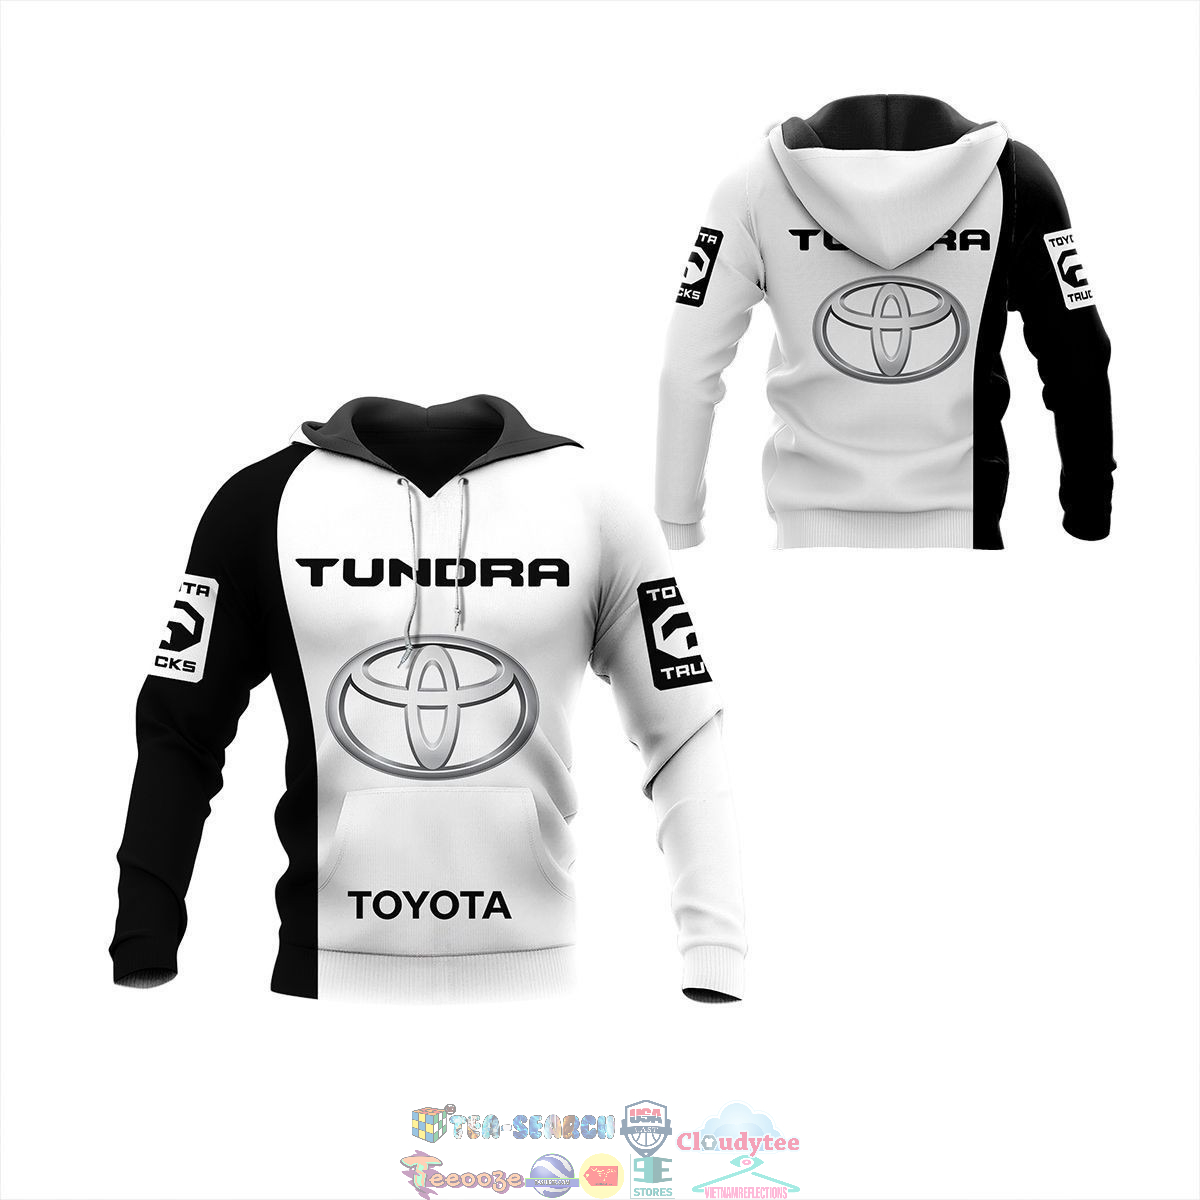 Toyota Tundra ver 10 3D hoodie and t-shirt – Saleoff